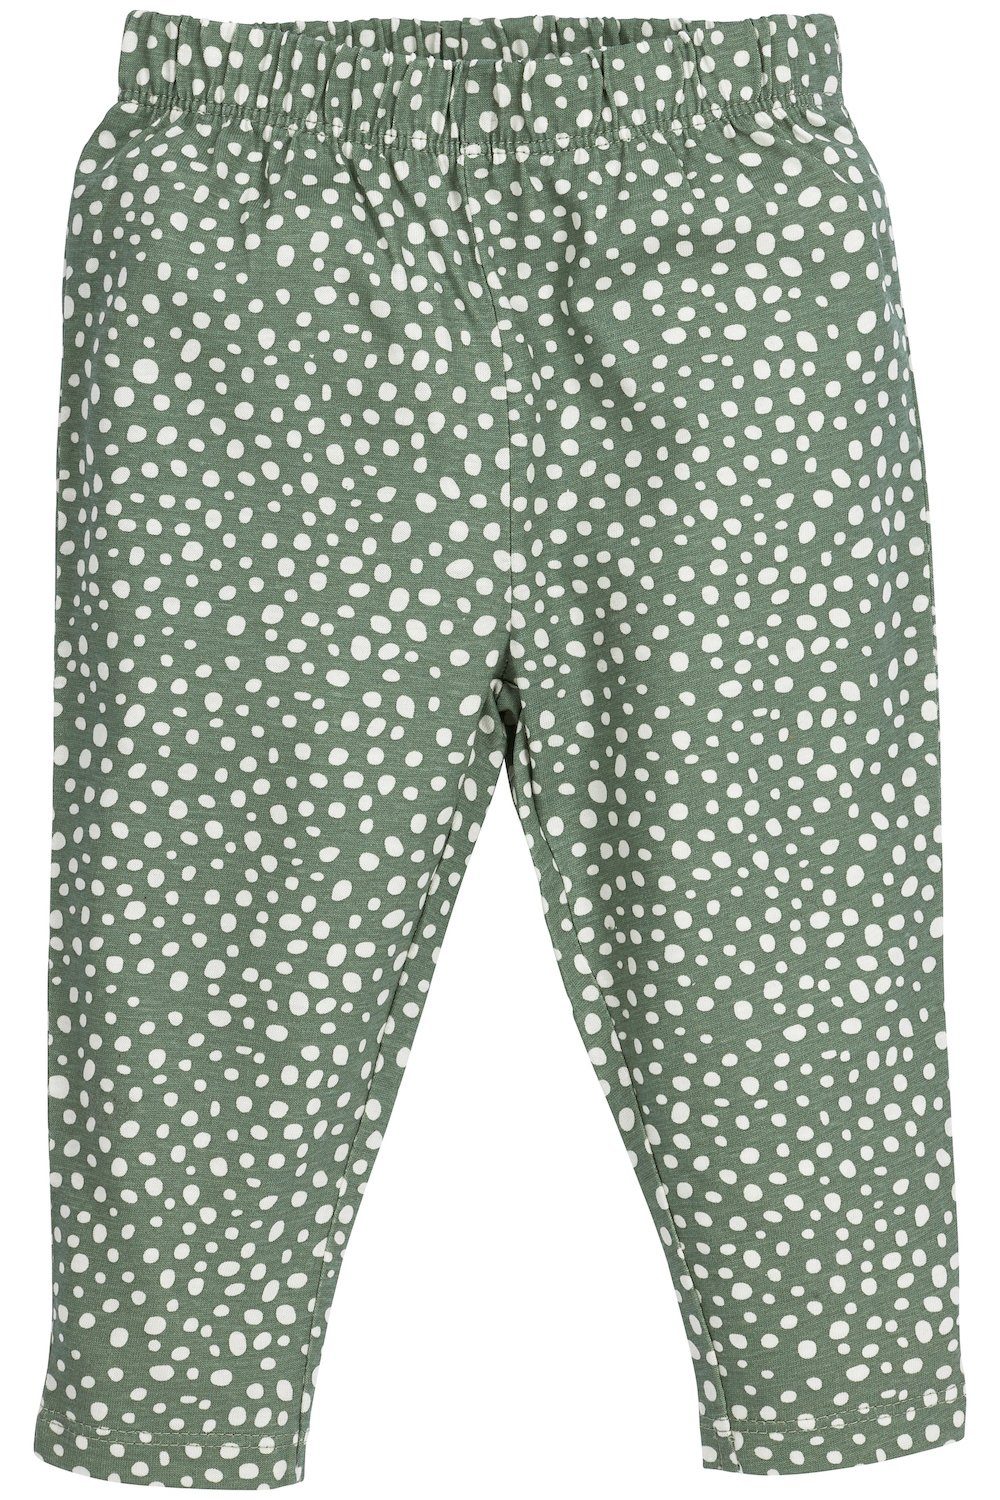 Forest 62/68 Pyjama Meyco Cheetah tlg) Green (2 Baby